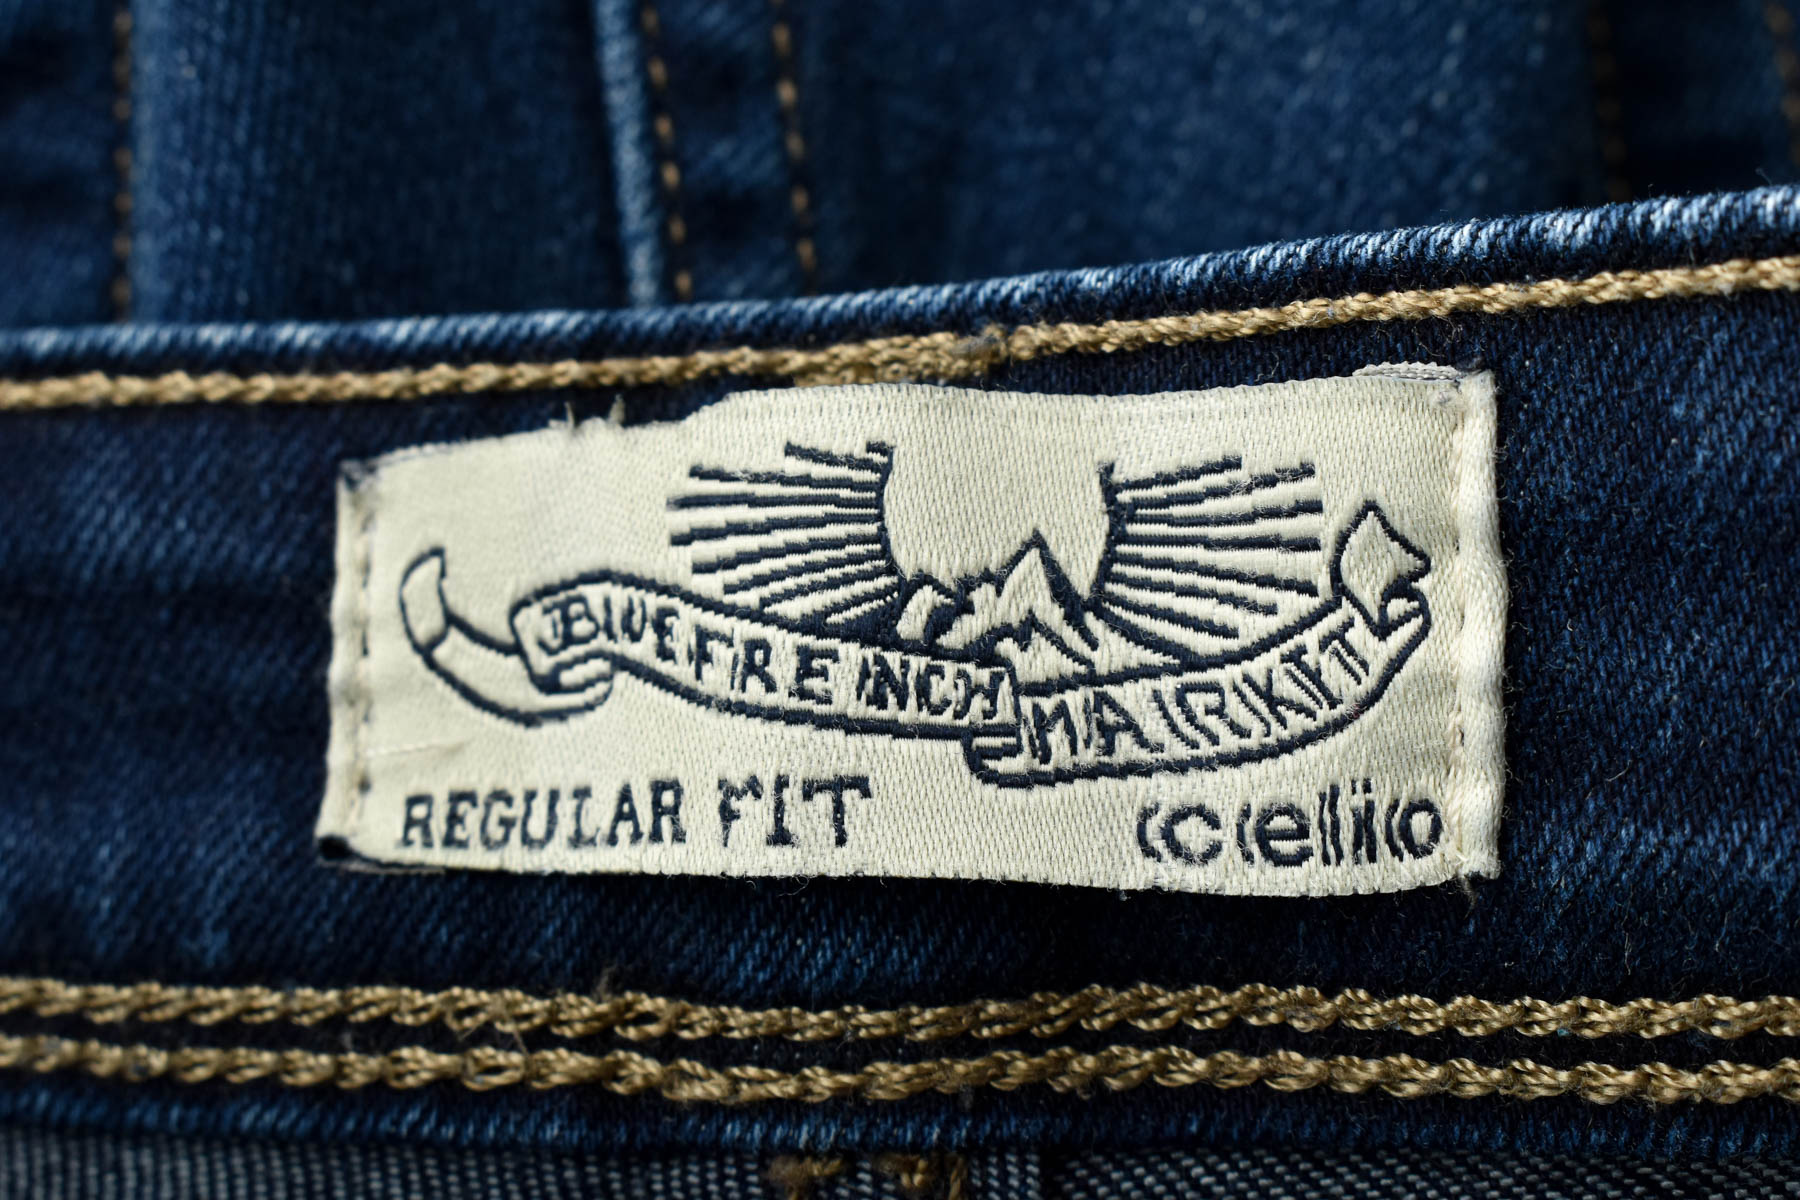 Men's jeans - Celio* - 2